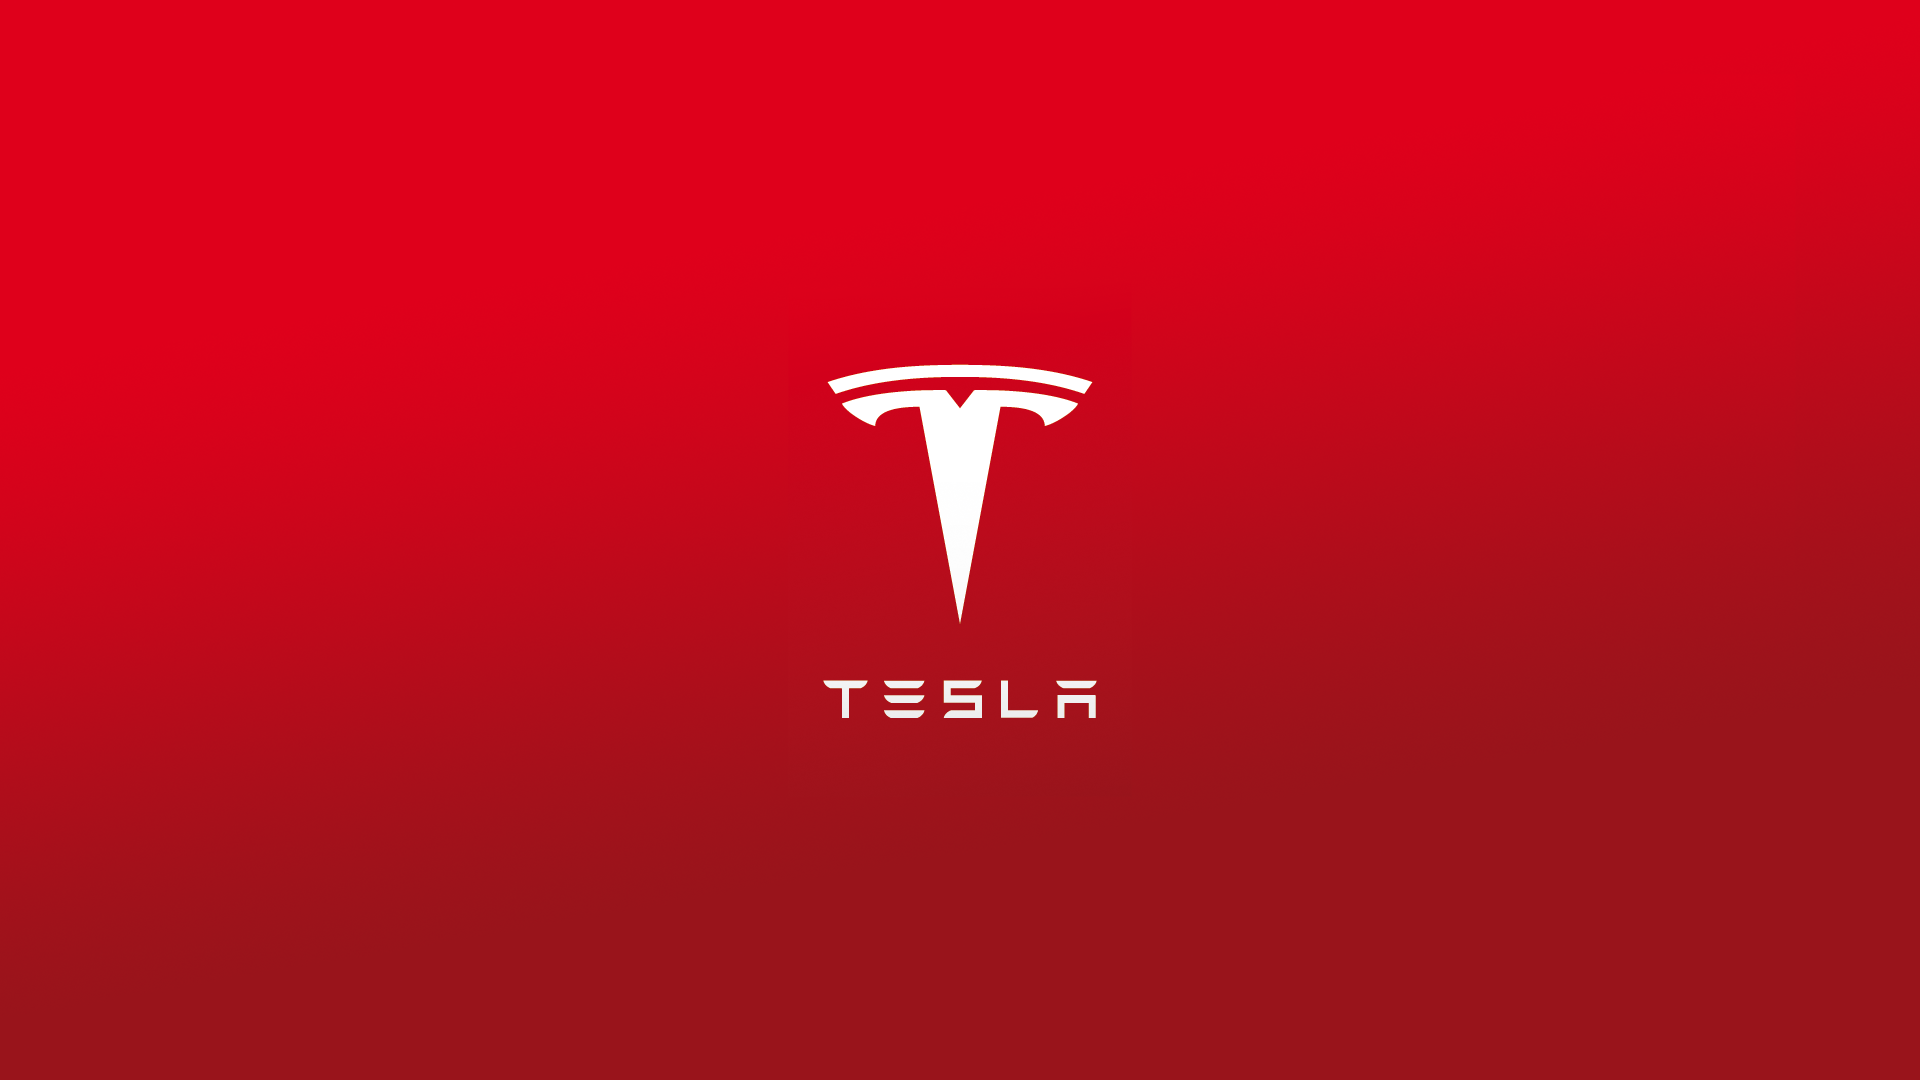 Tesla HD Wallpaper Background Image 1920x1080 ID757255